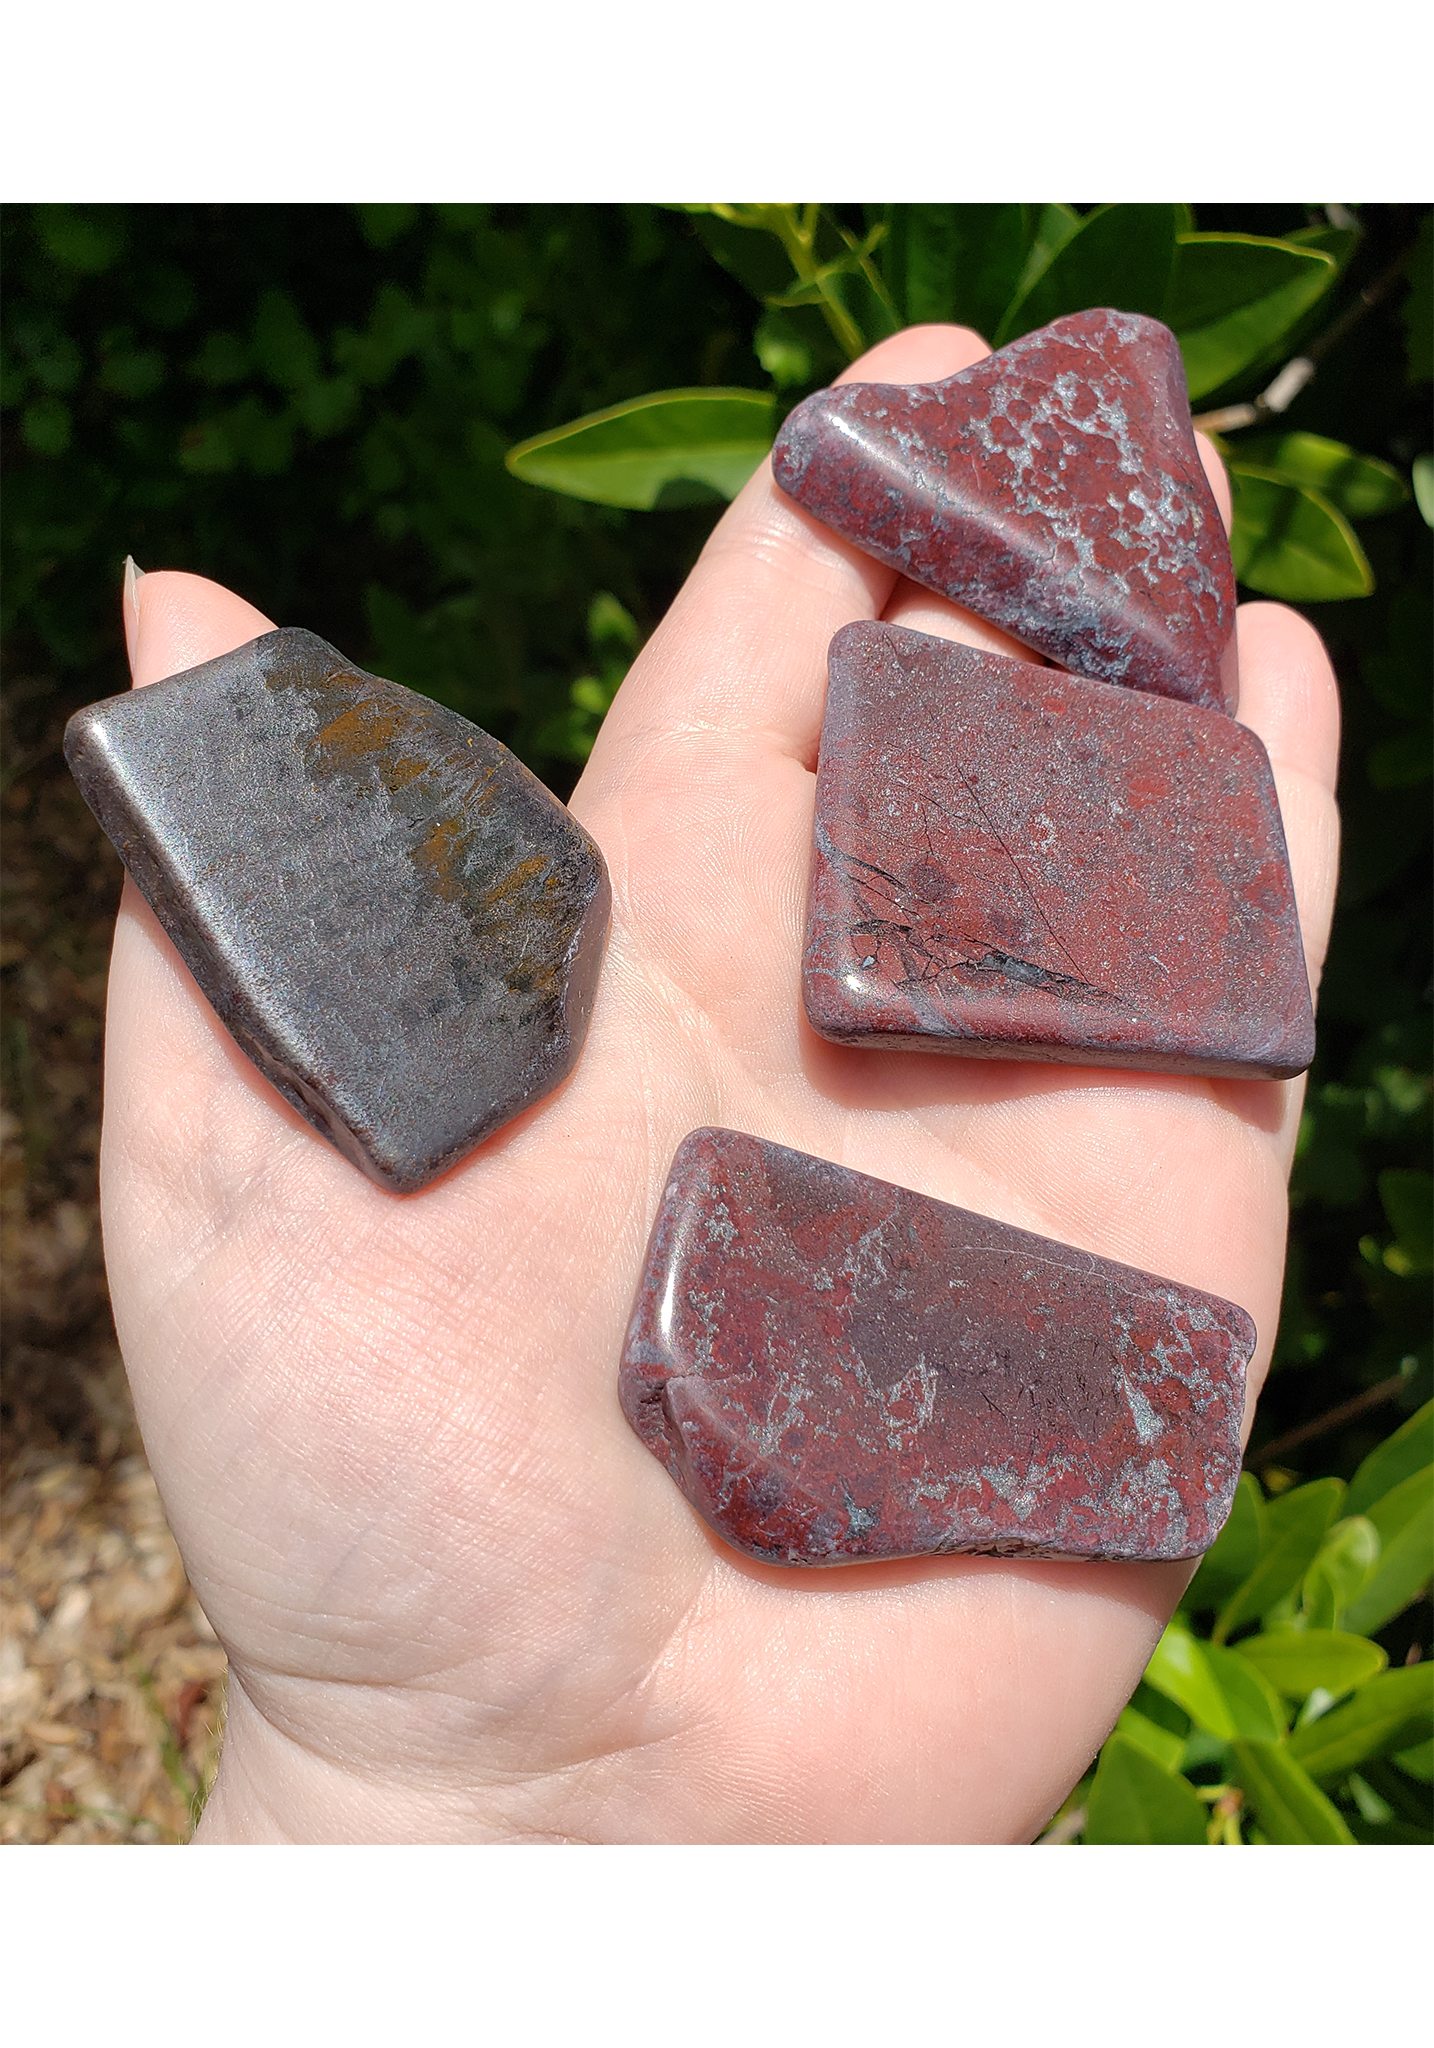 Red Jasper Hematite Martite Gemstone Slab - Single Stone